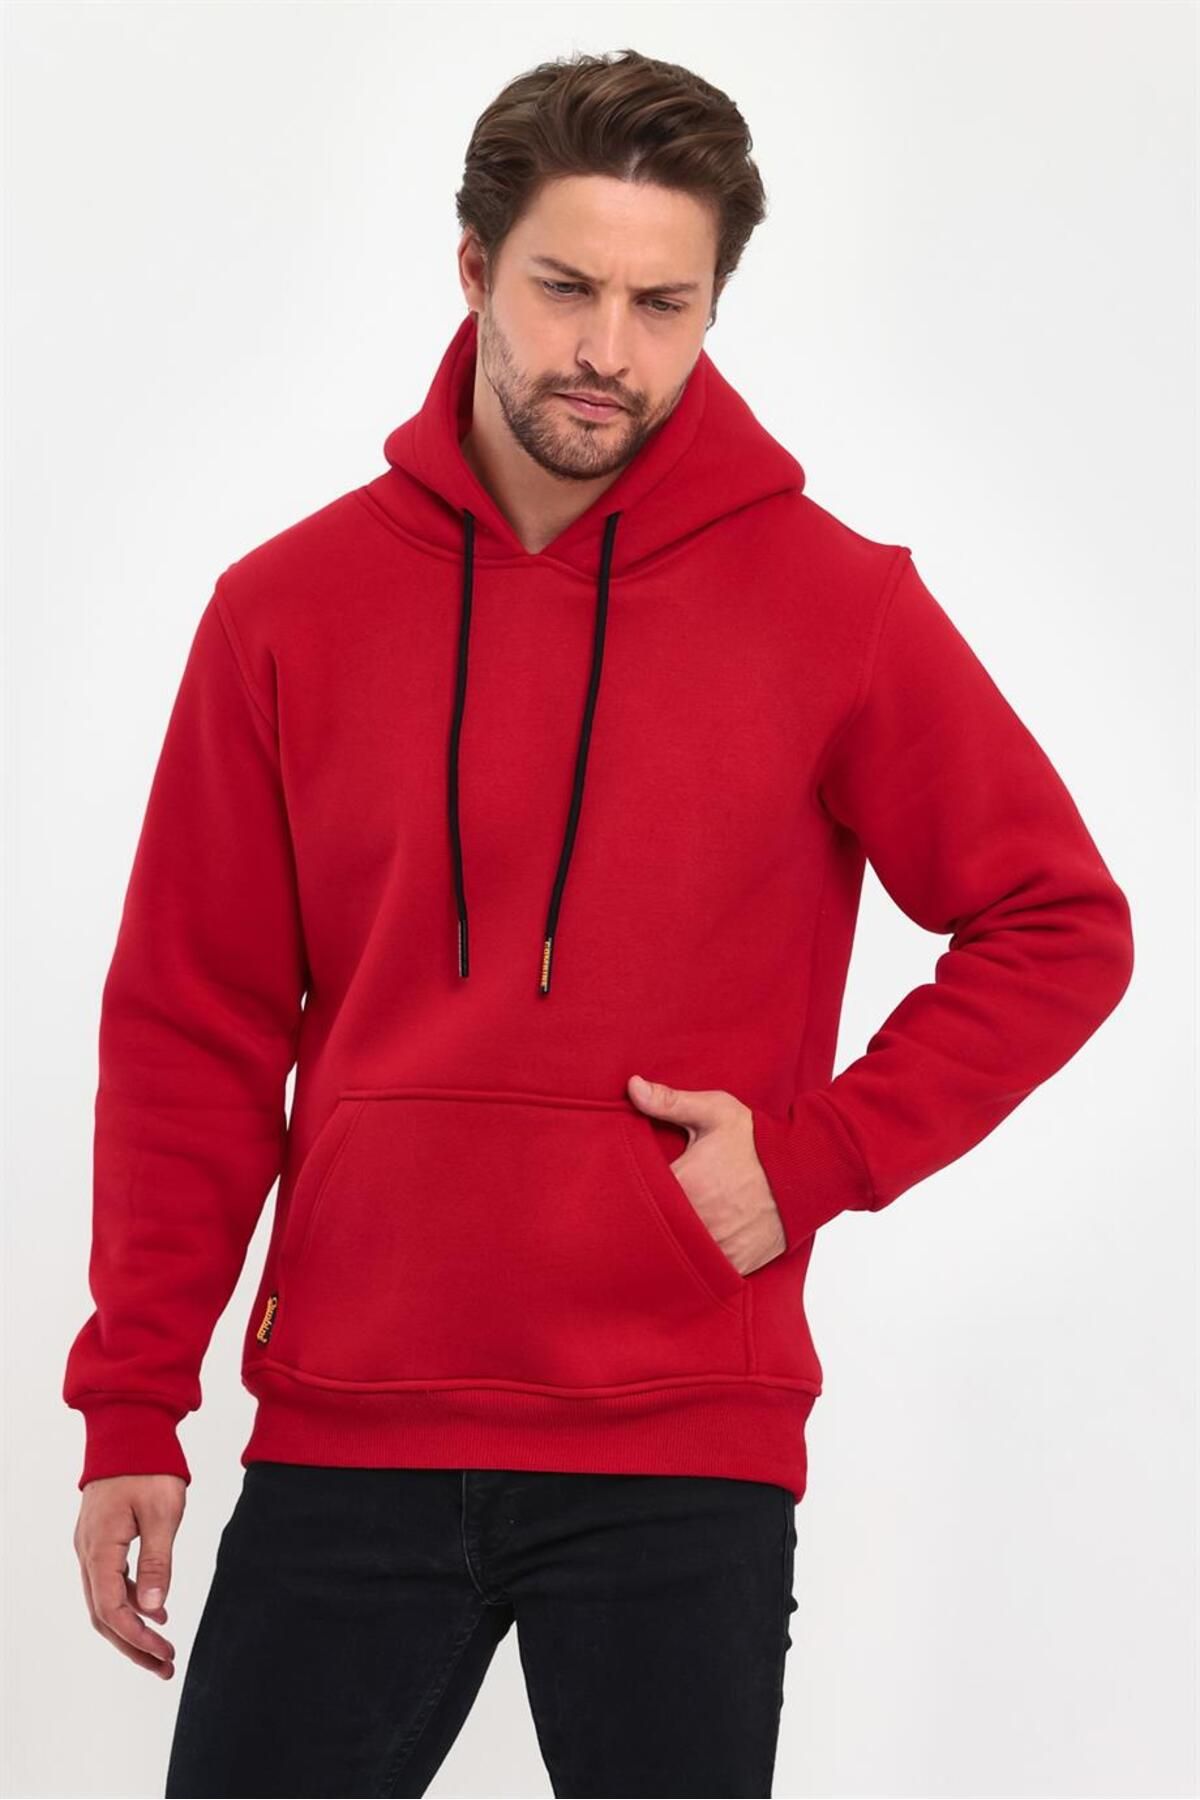 Cotton kangaroo-hooded sweatshirt - Men